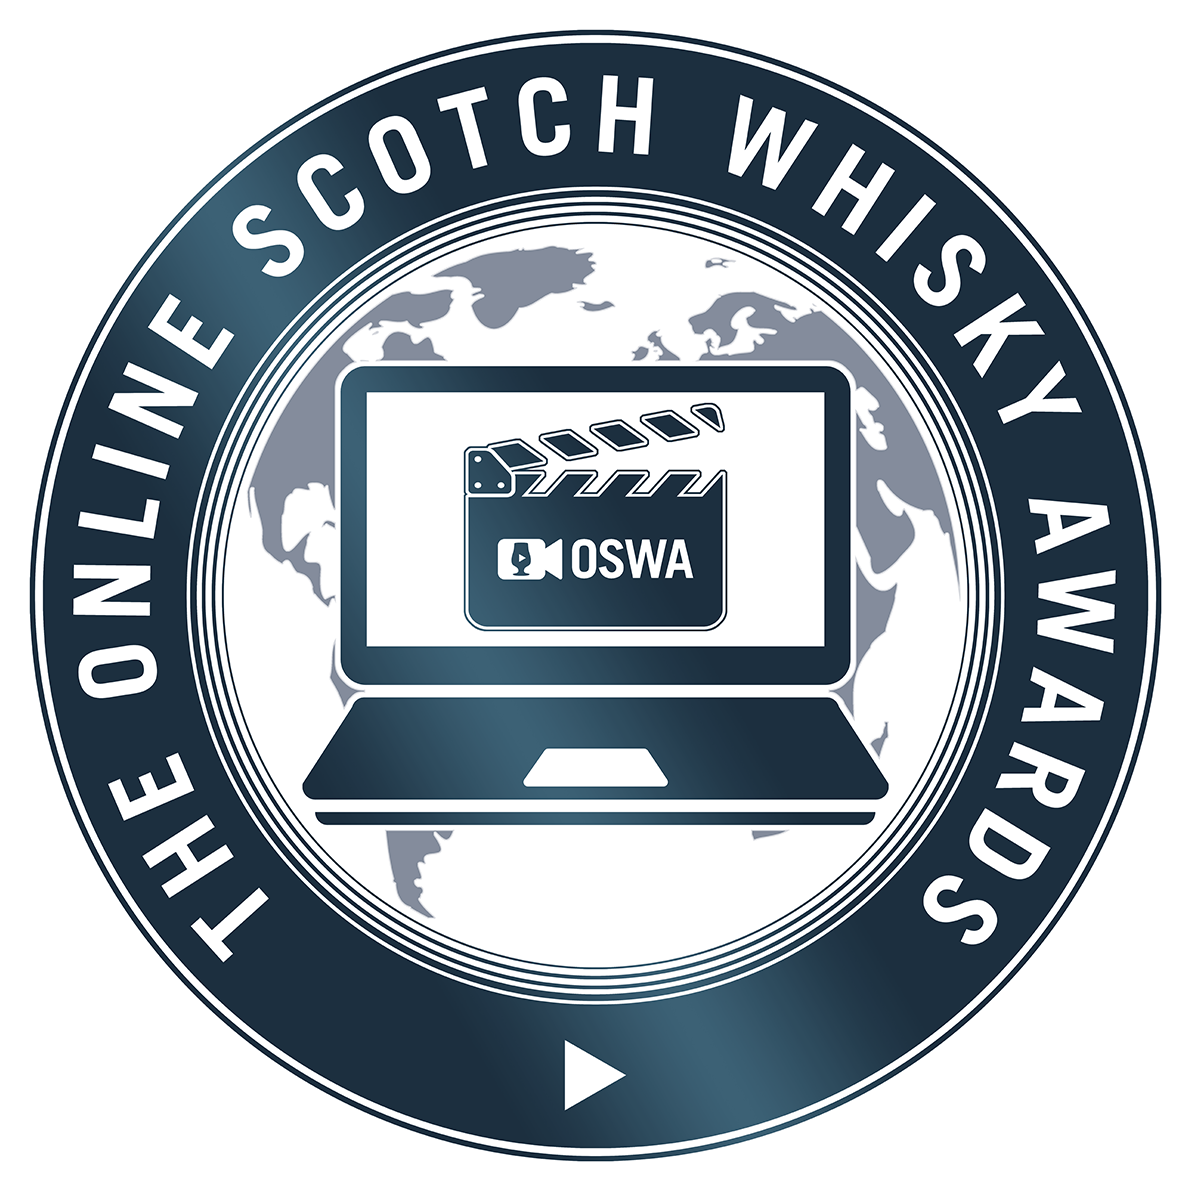 The Online Scotch Whisky Awards